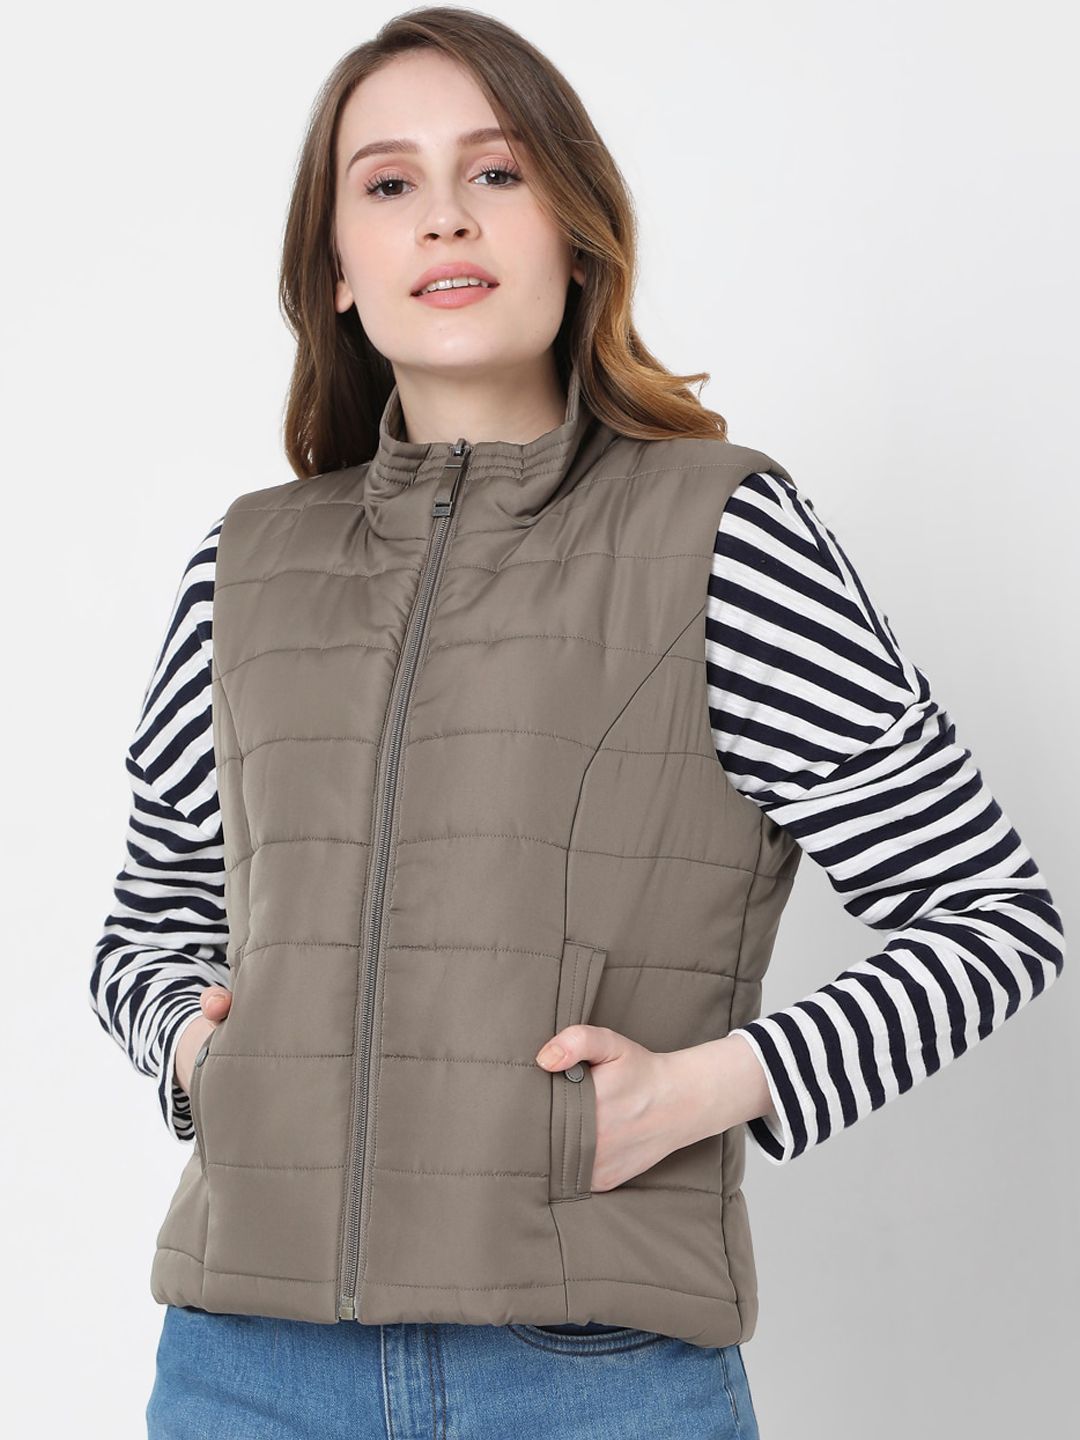 Vero Moda Women Grey Geometric Puffer Jacket Price in India